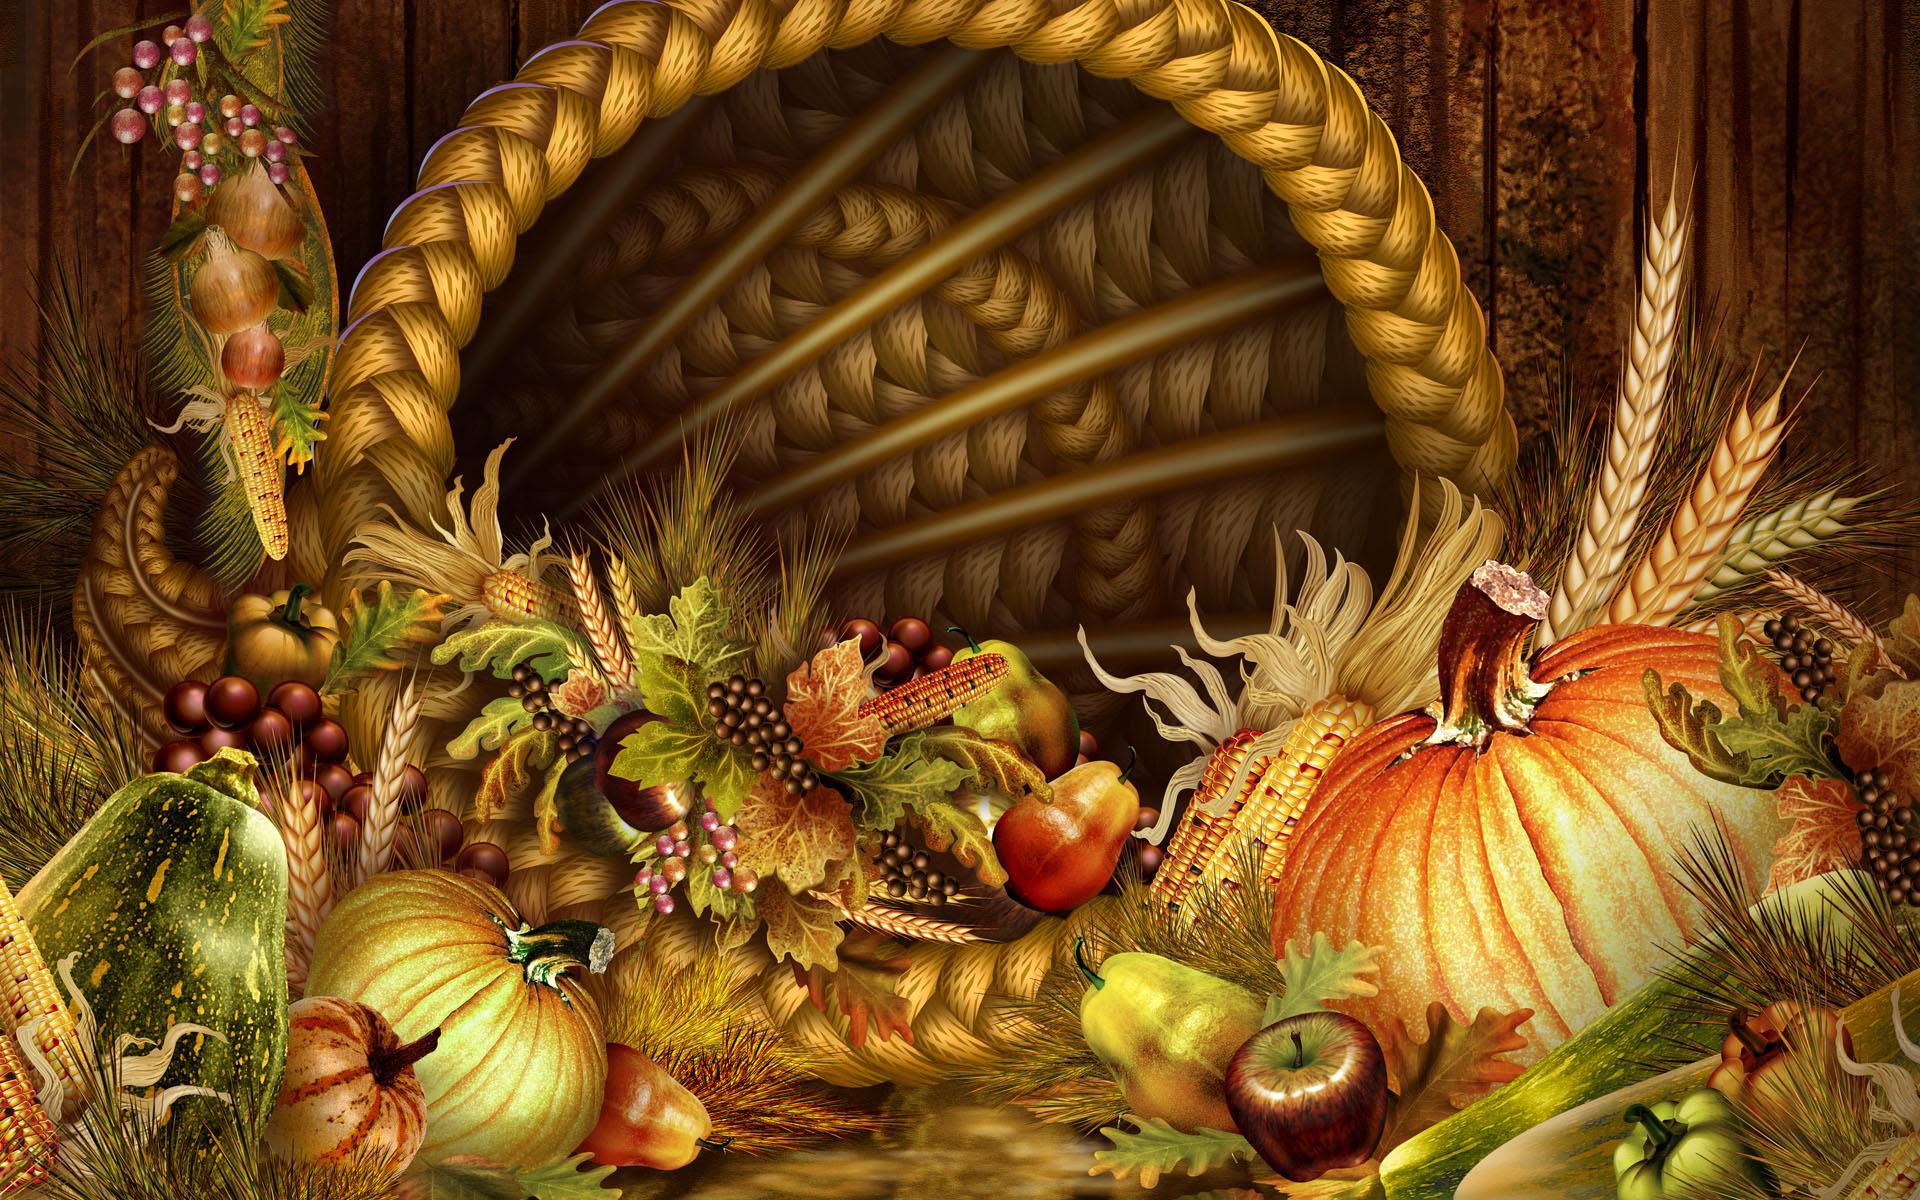 holiday, thanksgiving Image for desktop